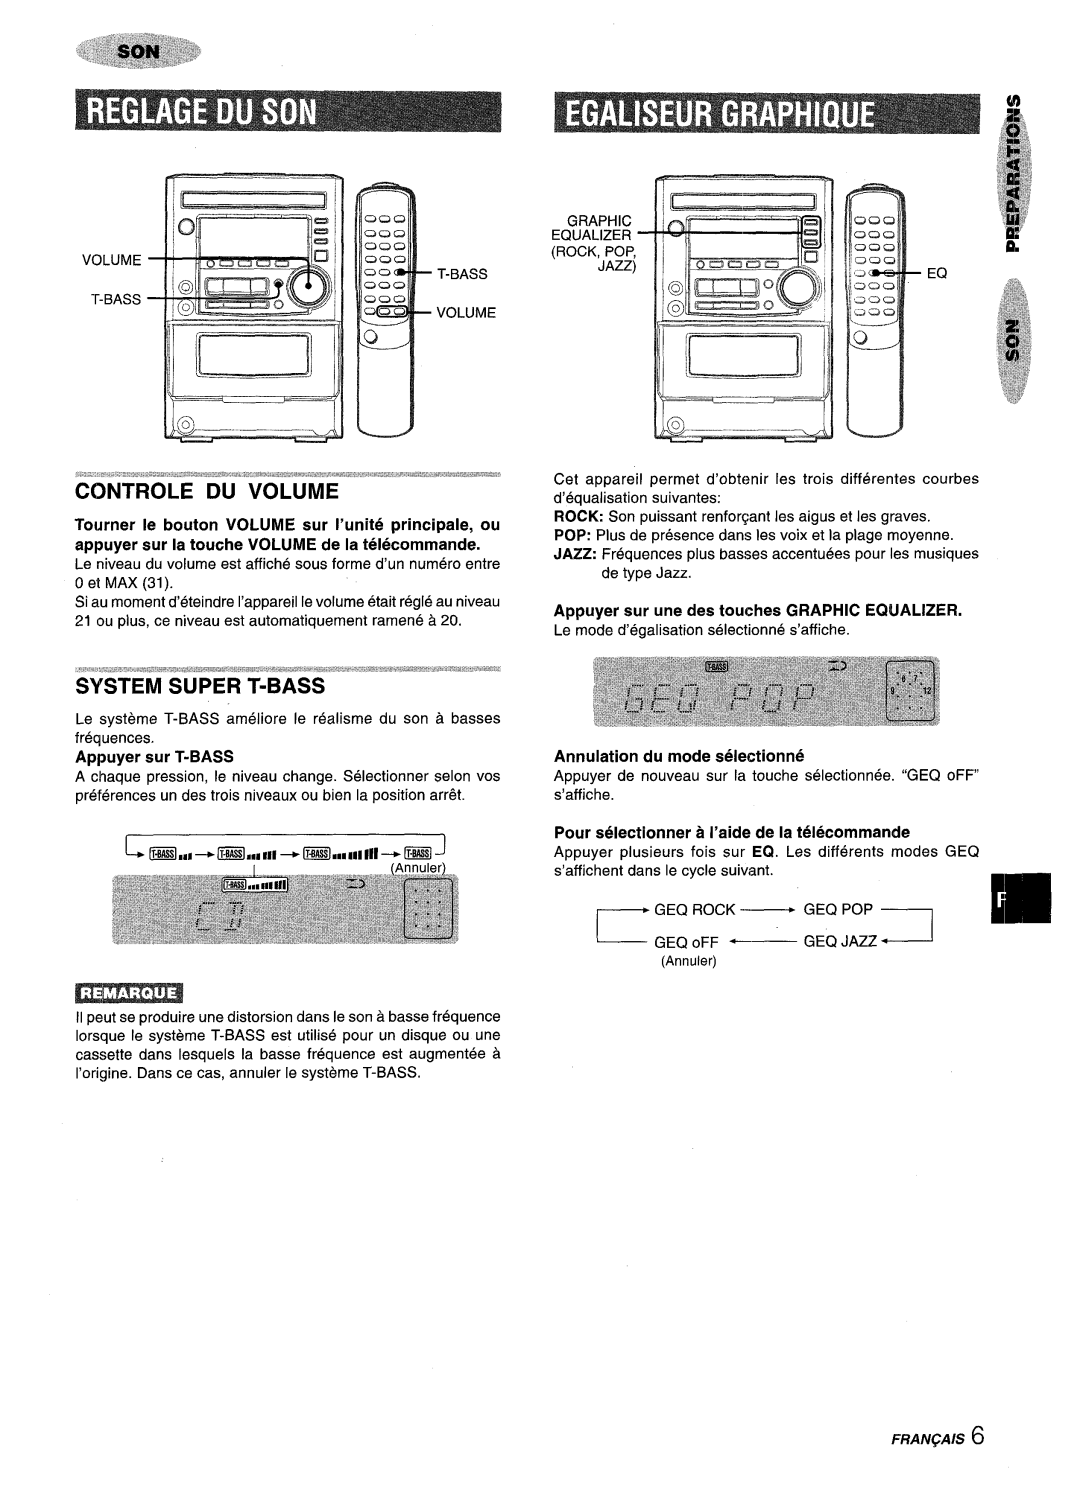 Aiwa XM-M25 manual Controle Du Volume, System Super T-Bass, Lm,,l+m,,,llf +m,,,llifii+m J, Appuyer sur T-BASS 